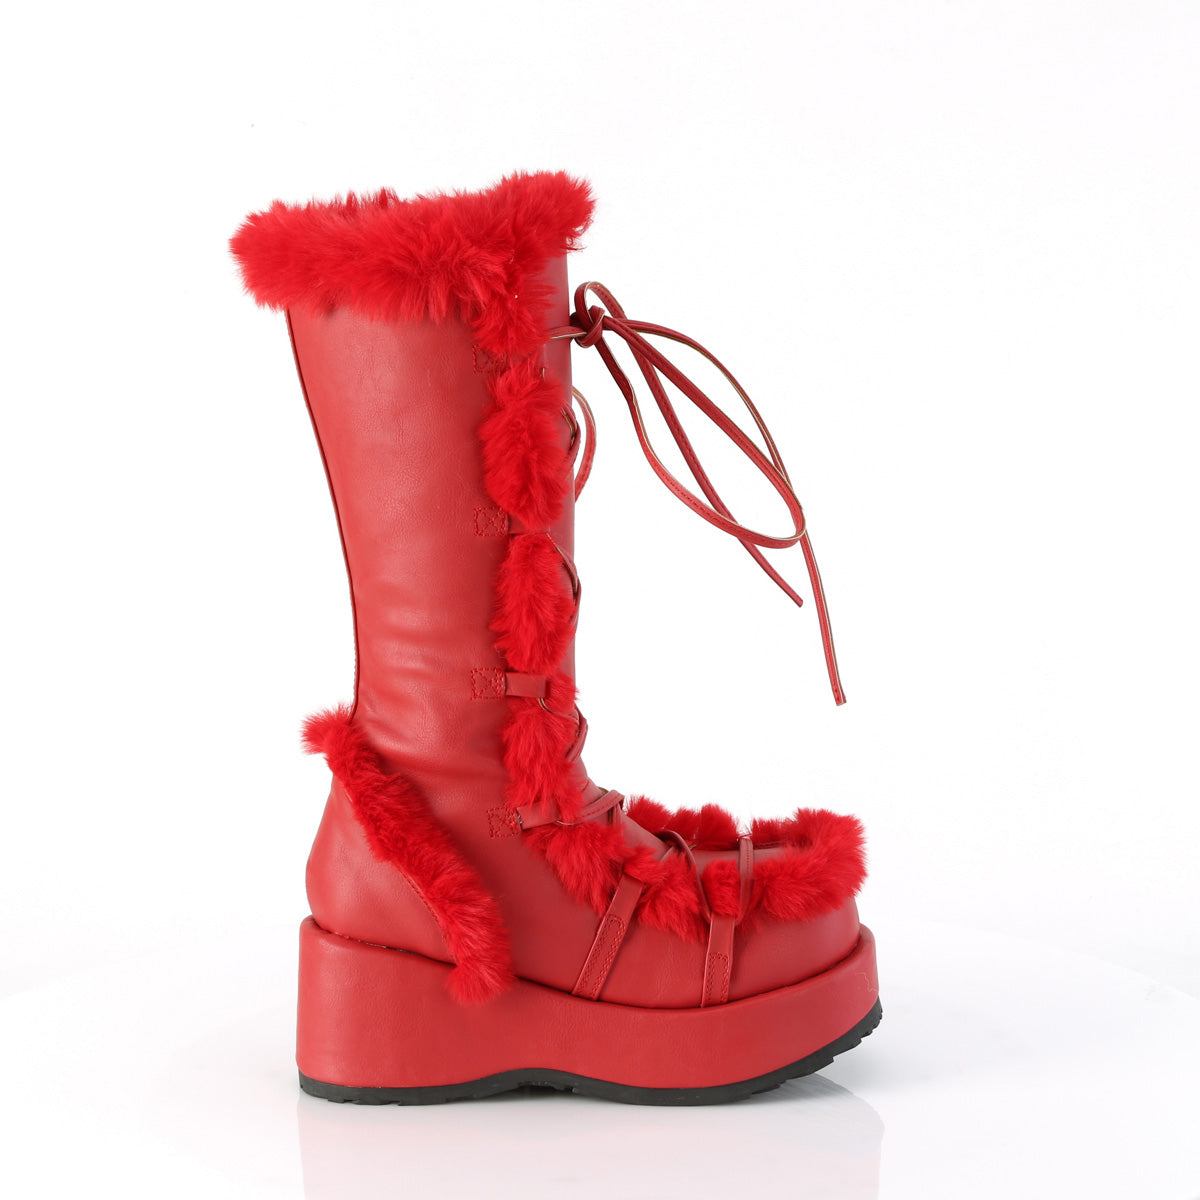 CUBBY-311 Demonia Red Vegan Leather Women's Mid-Calf & Knee High Boots [Demonia Cult Alternative Footwear]